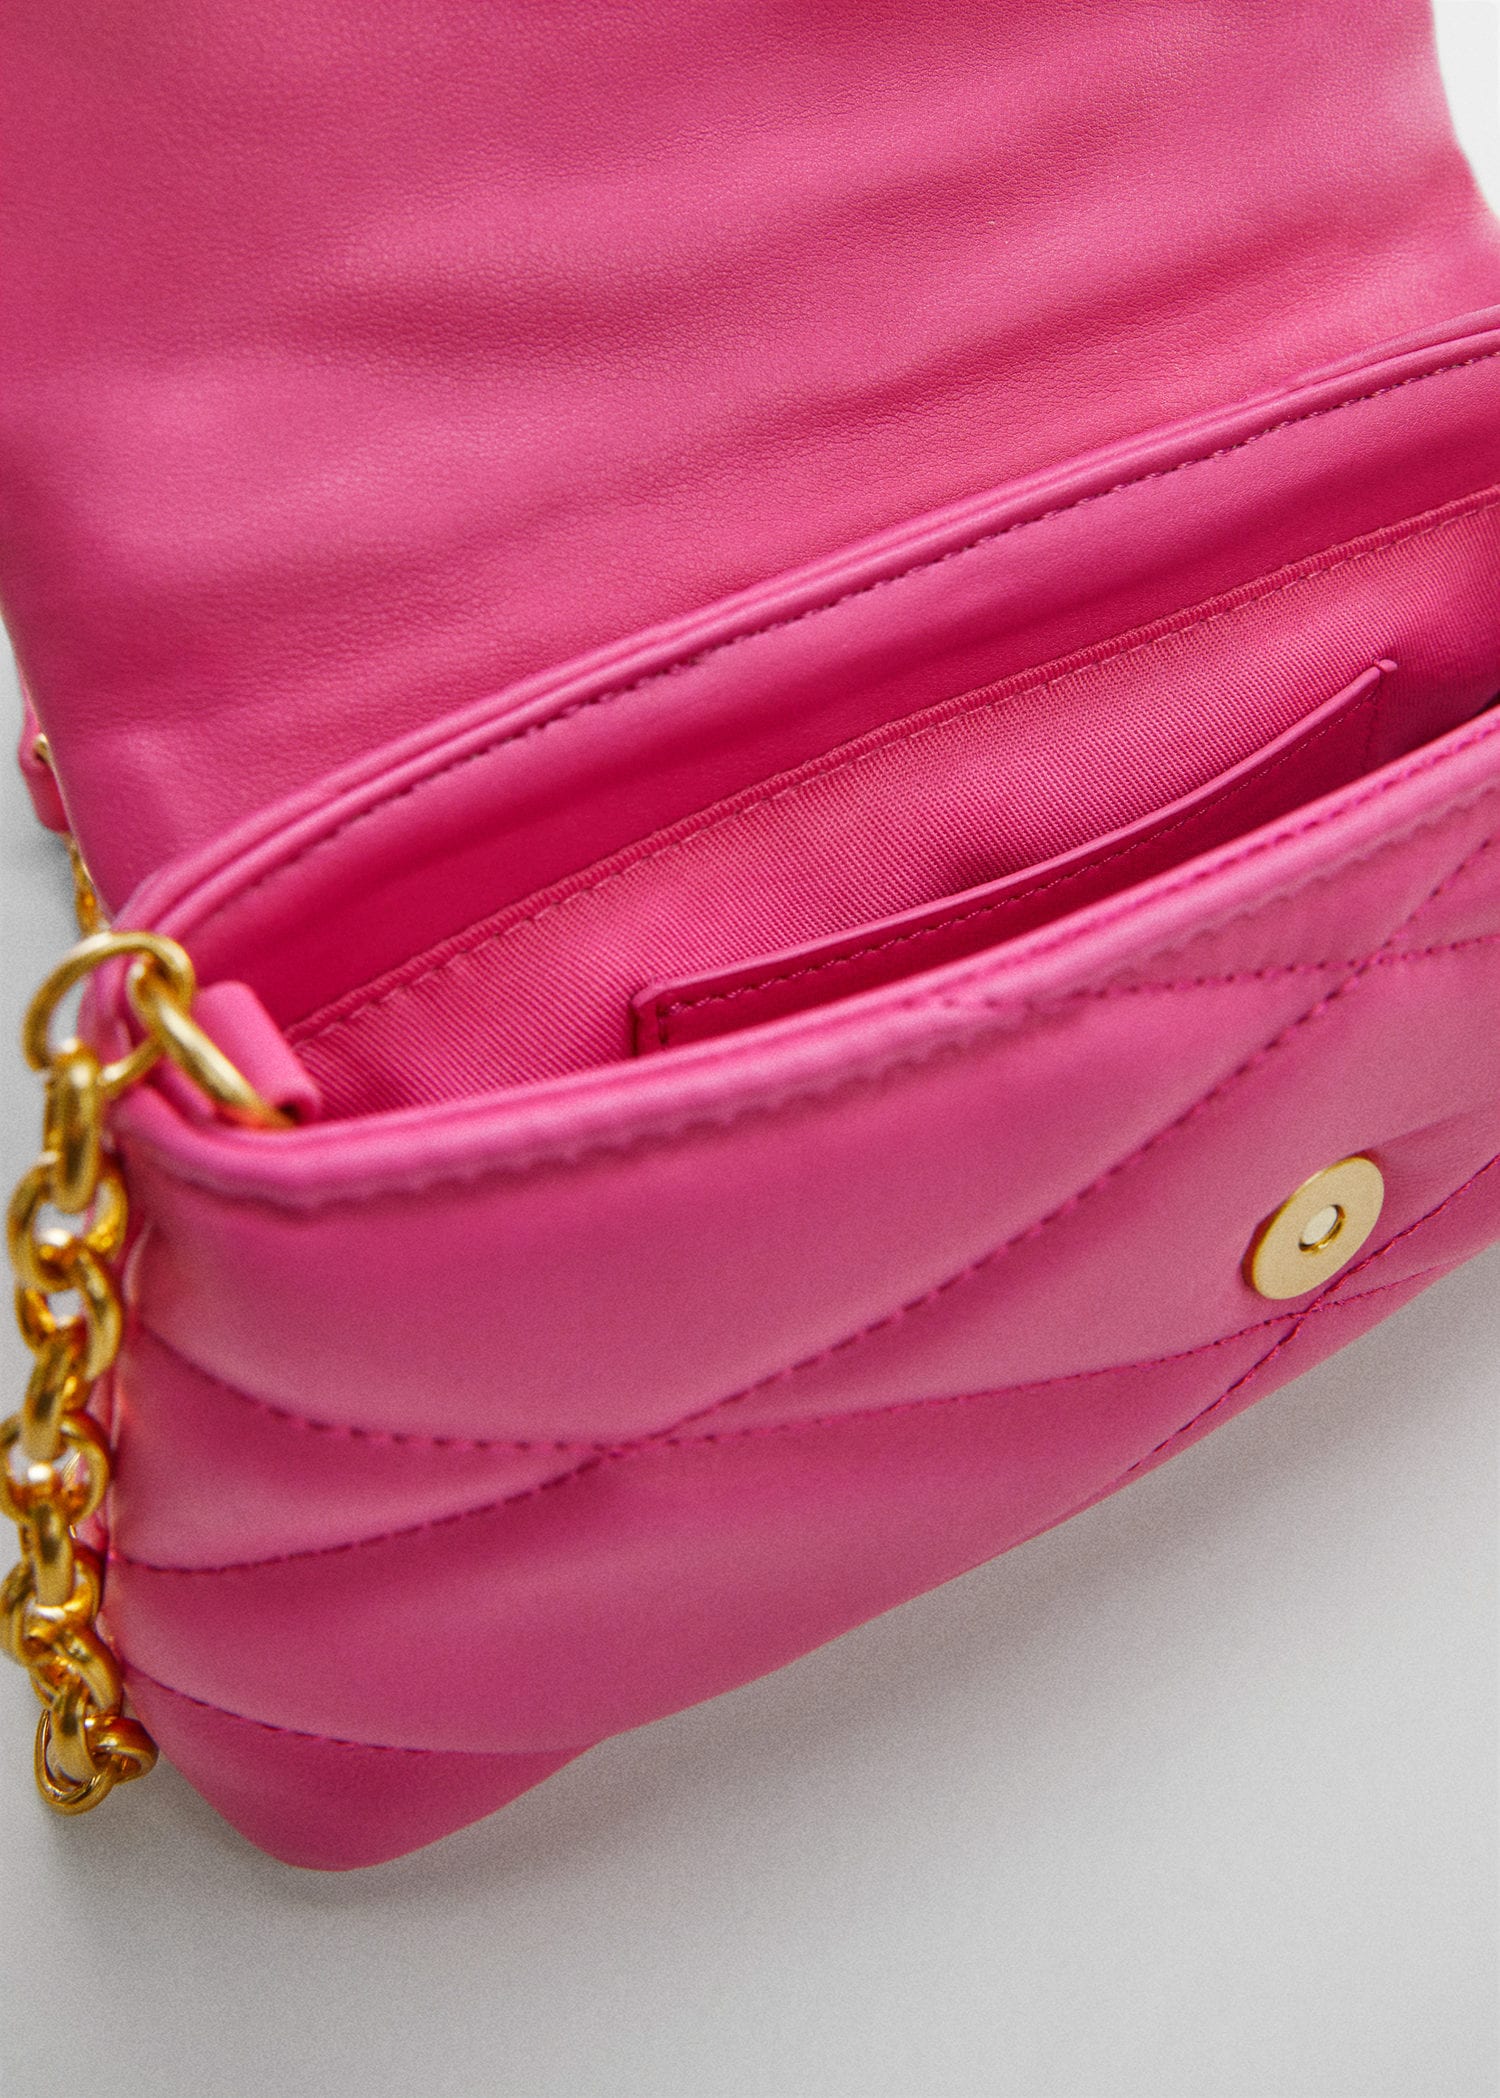 Mango MNG Red Satchel Look Clutch/Handbag New and Unused | eBay